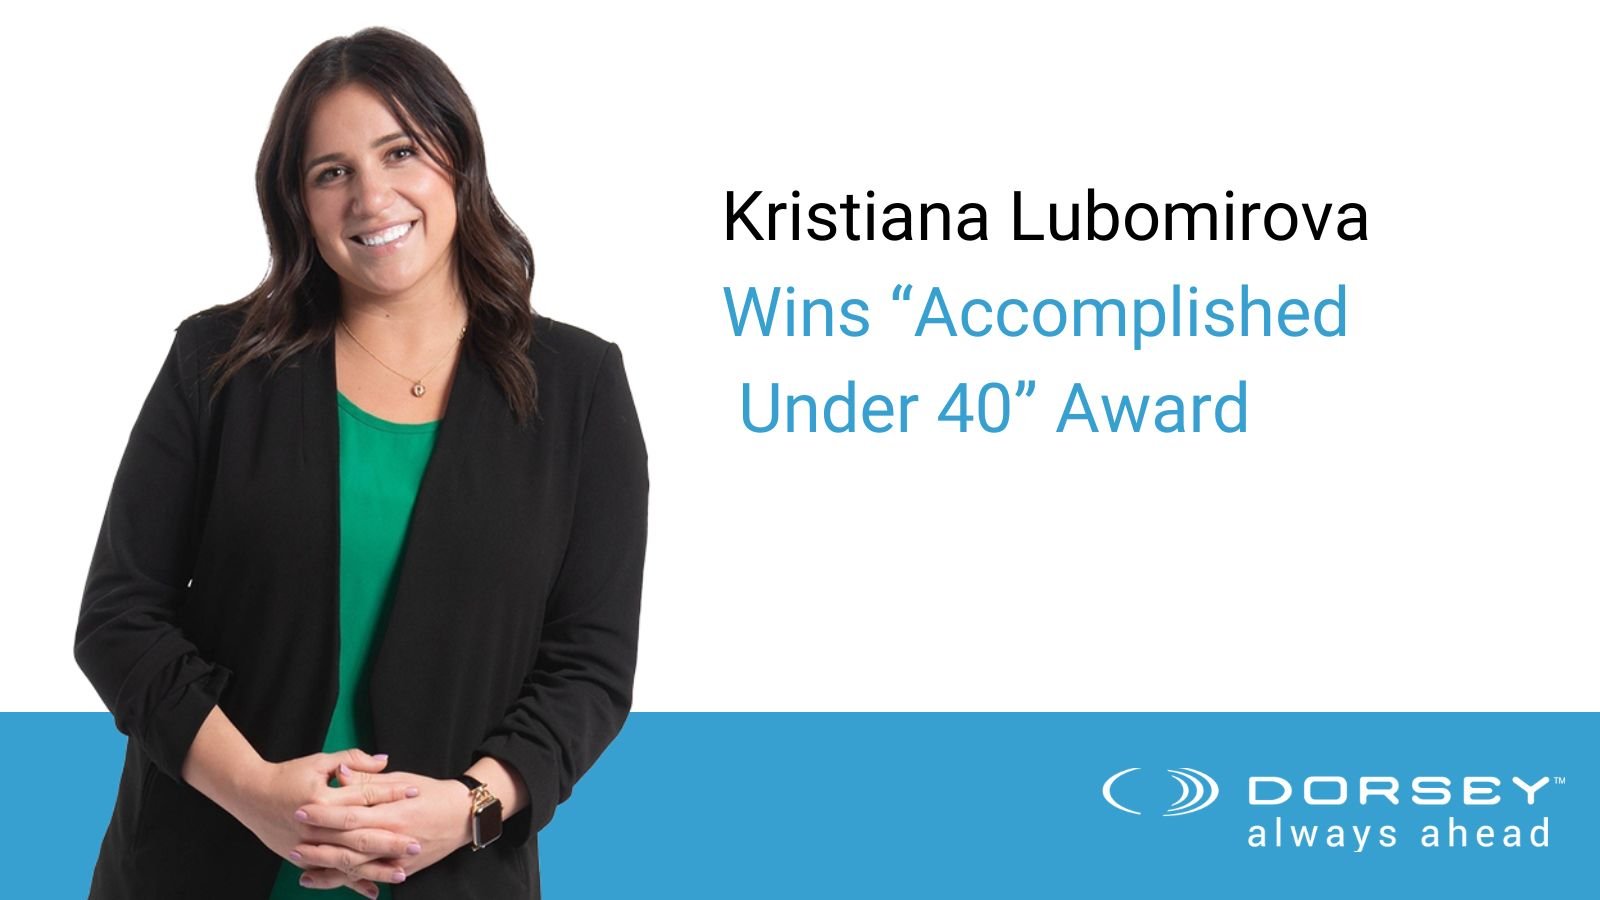 Kristiana Lubomirova Accomplished Under 40